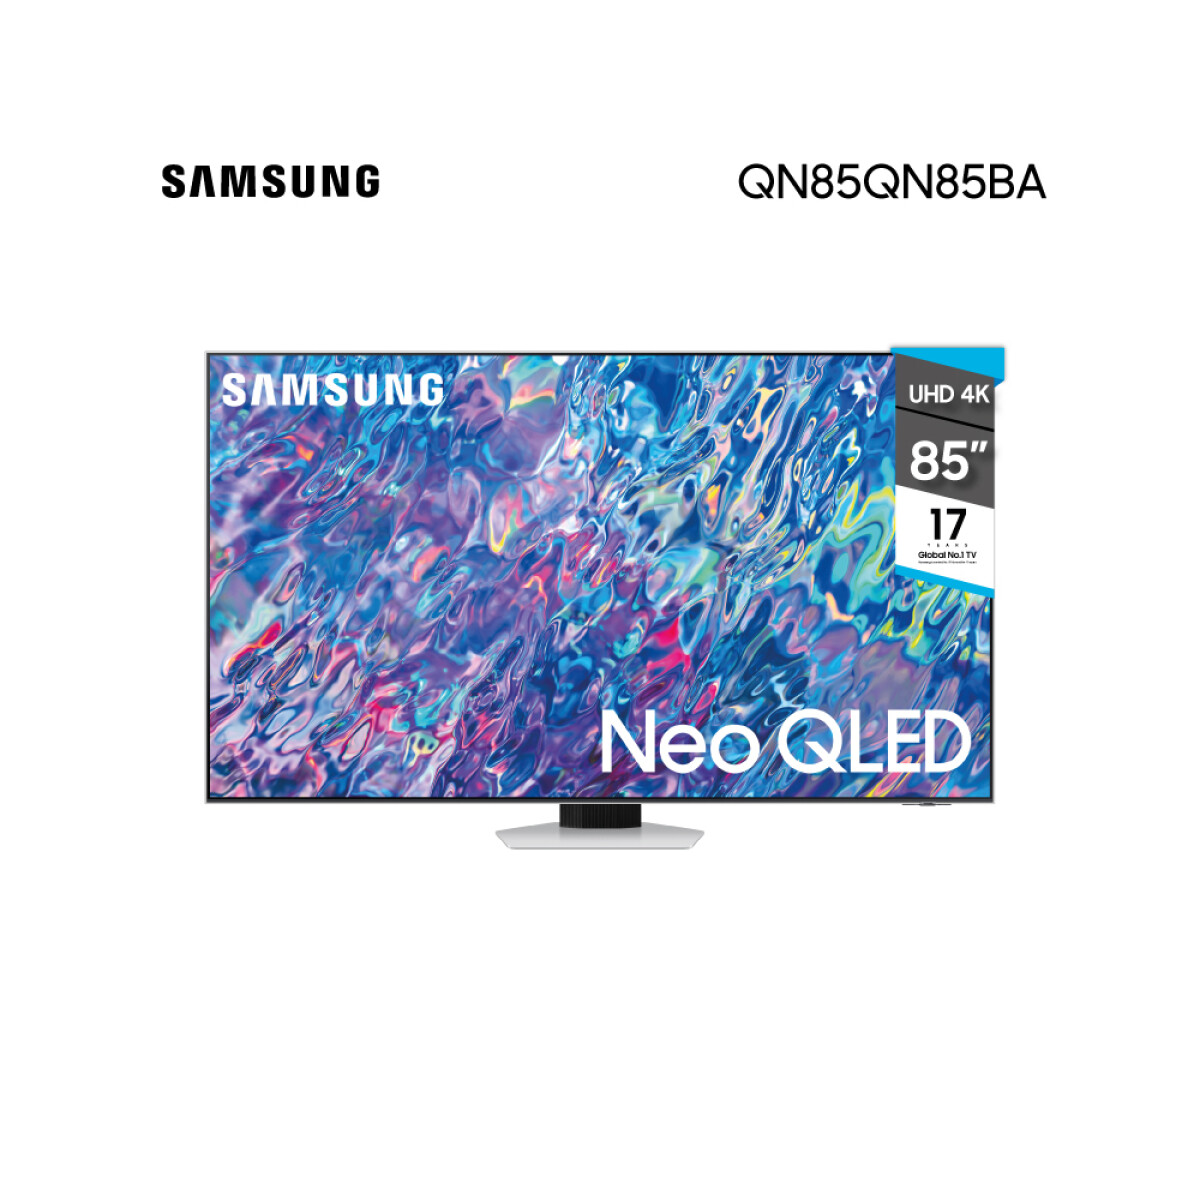 Smart TV Samsung 85" Neo QLED UHD 4K SAQN85QN85BA 